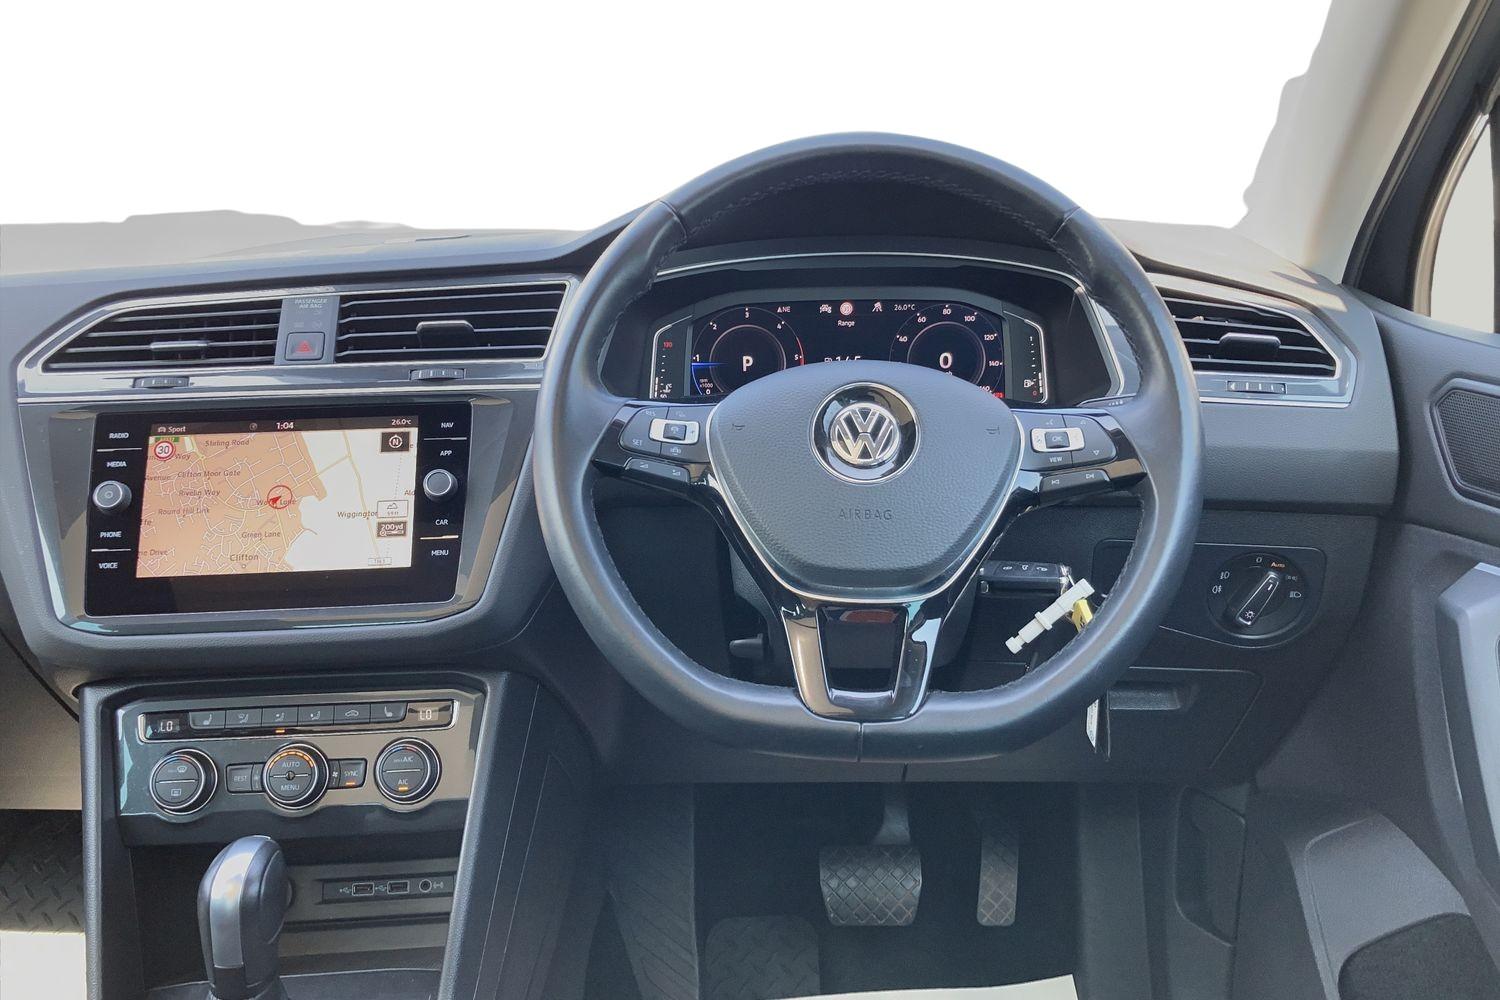 2019 Volkswagen Tiguan review | Car Reviews | Auto123